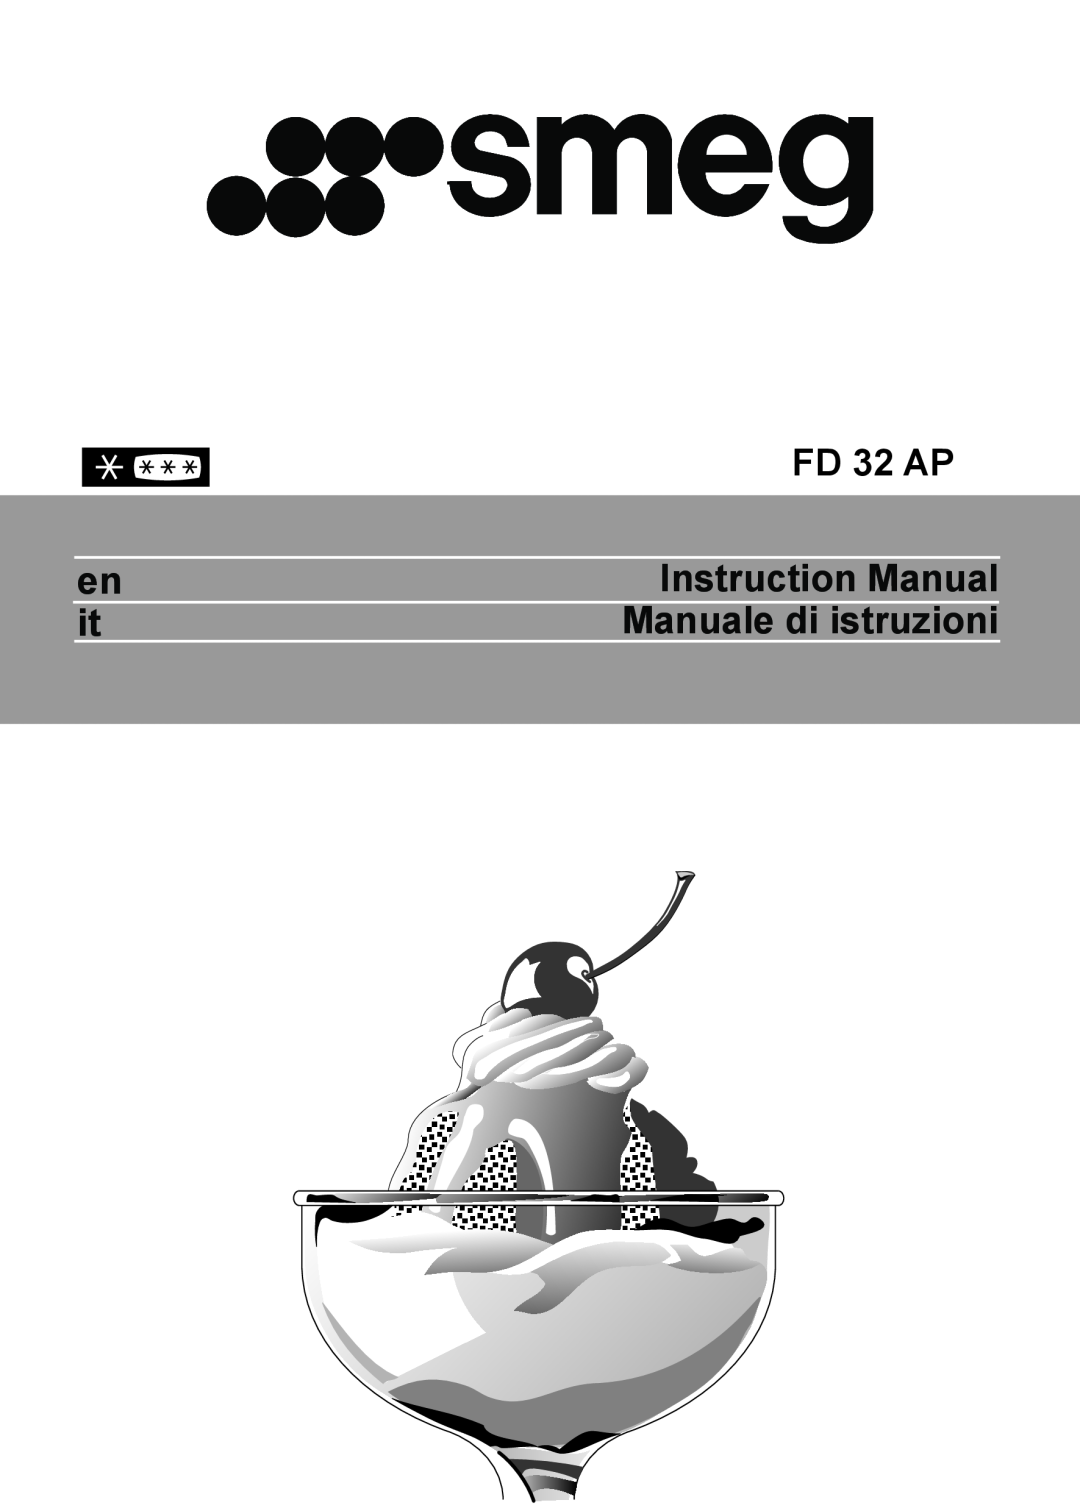 Smeg FD 32 AP instruction manual Manuale di istruzioni 